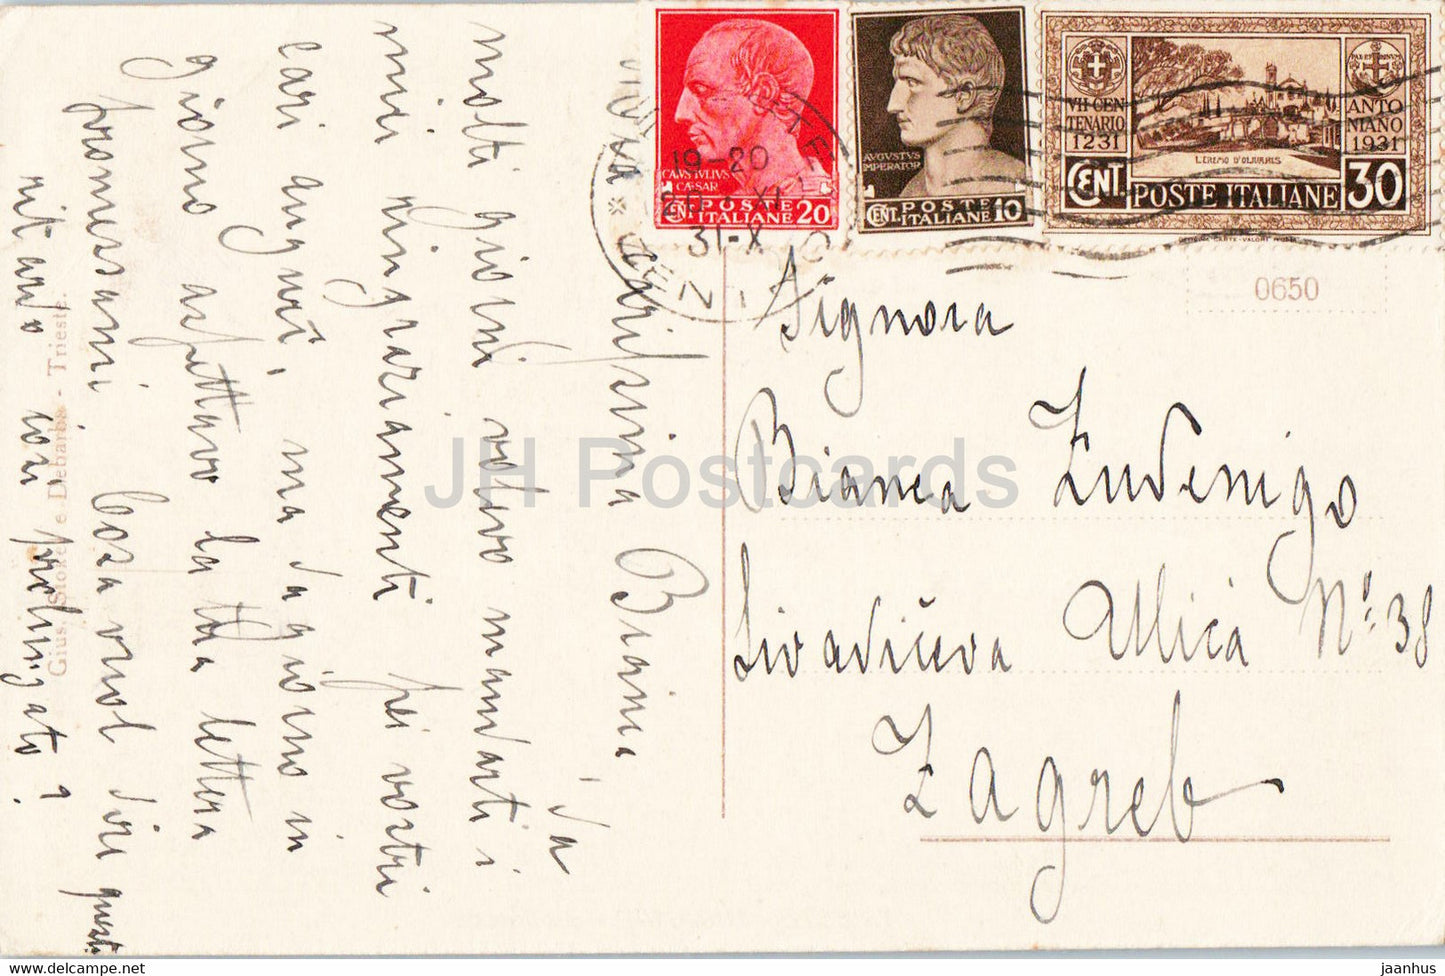 Triest - Miramar - Biblioteca - Bibliothek - alte Postkarte - 1931 - Italien - gebraucht